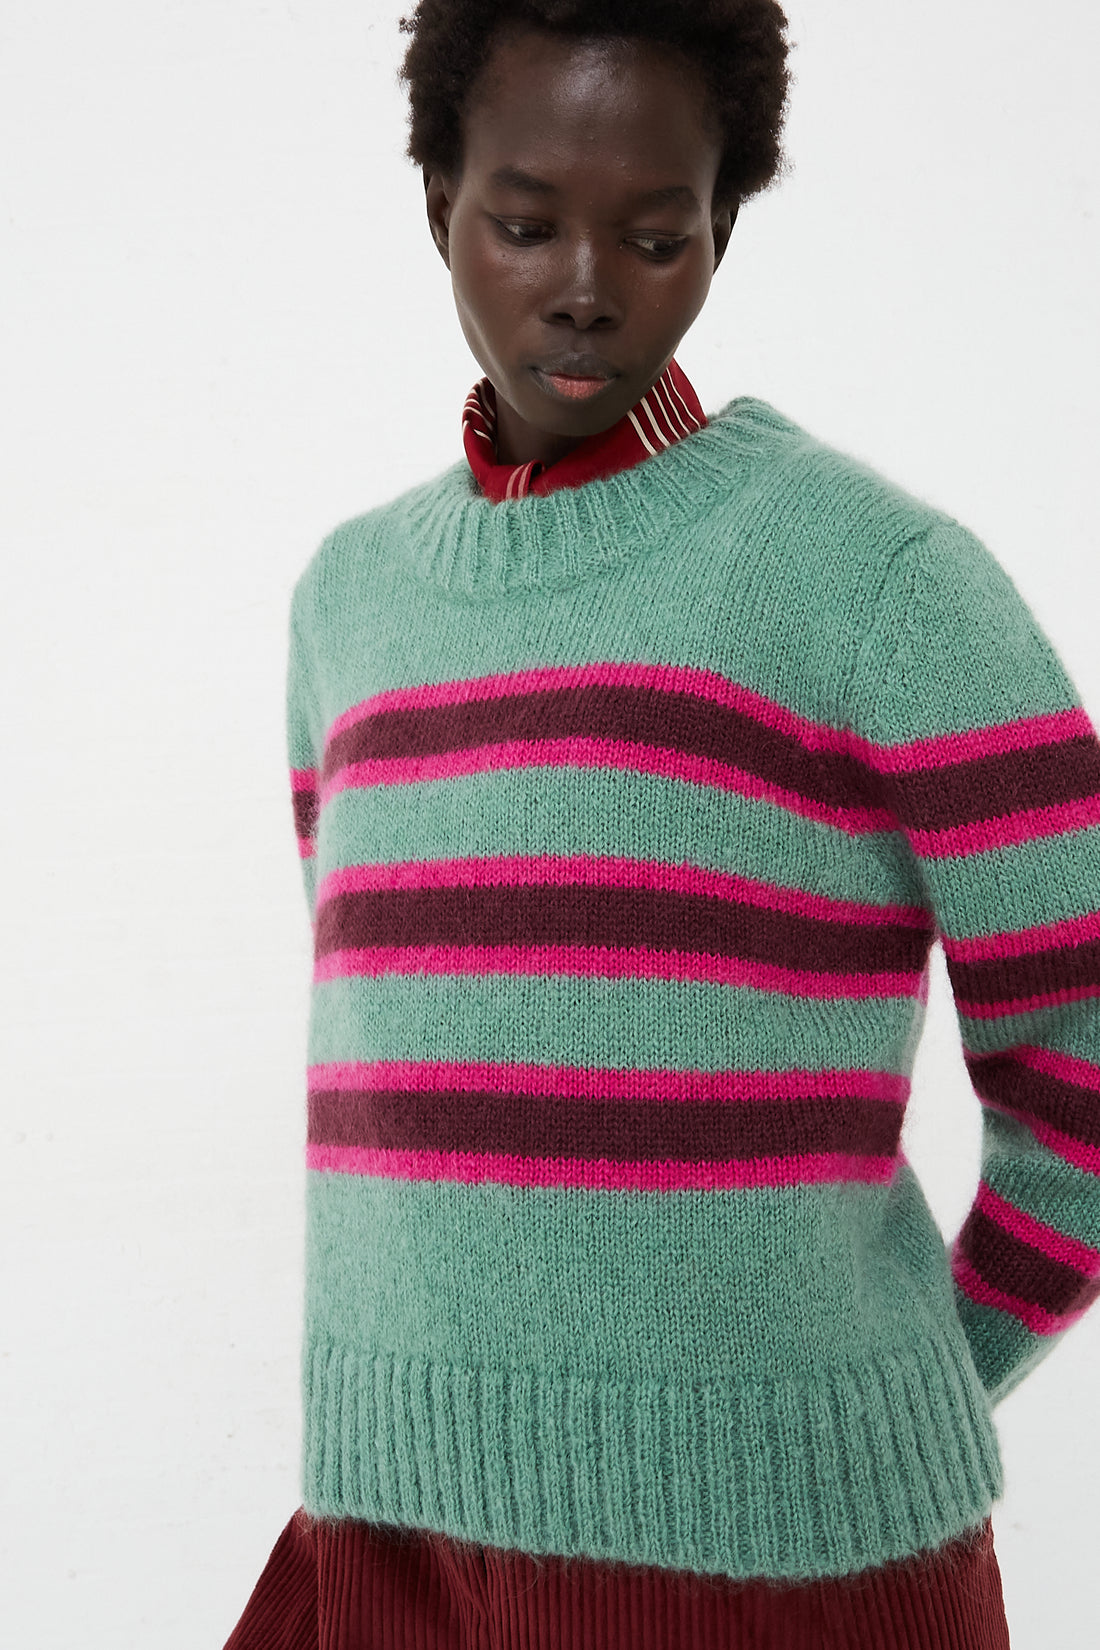 CARON CALLAHAN - Mohair Fletcher Sweater in Seafoam Stripe | Oroboro Store